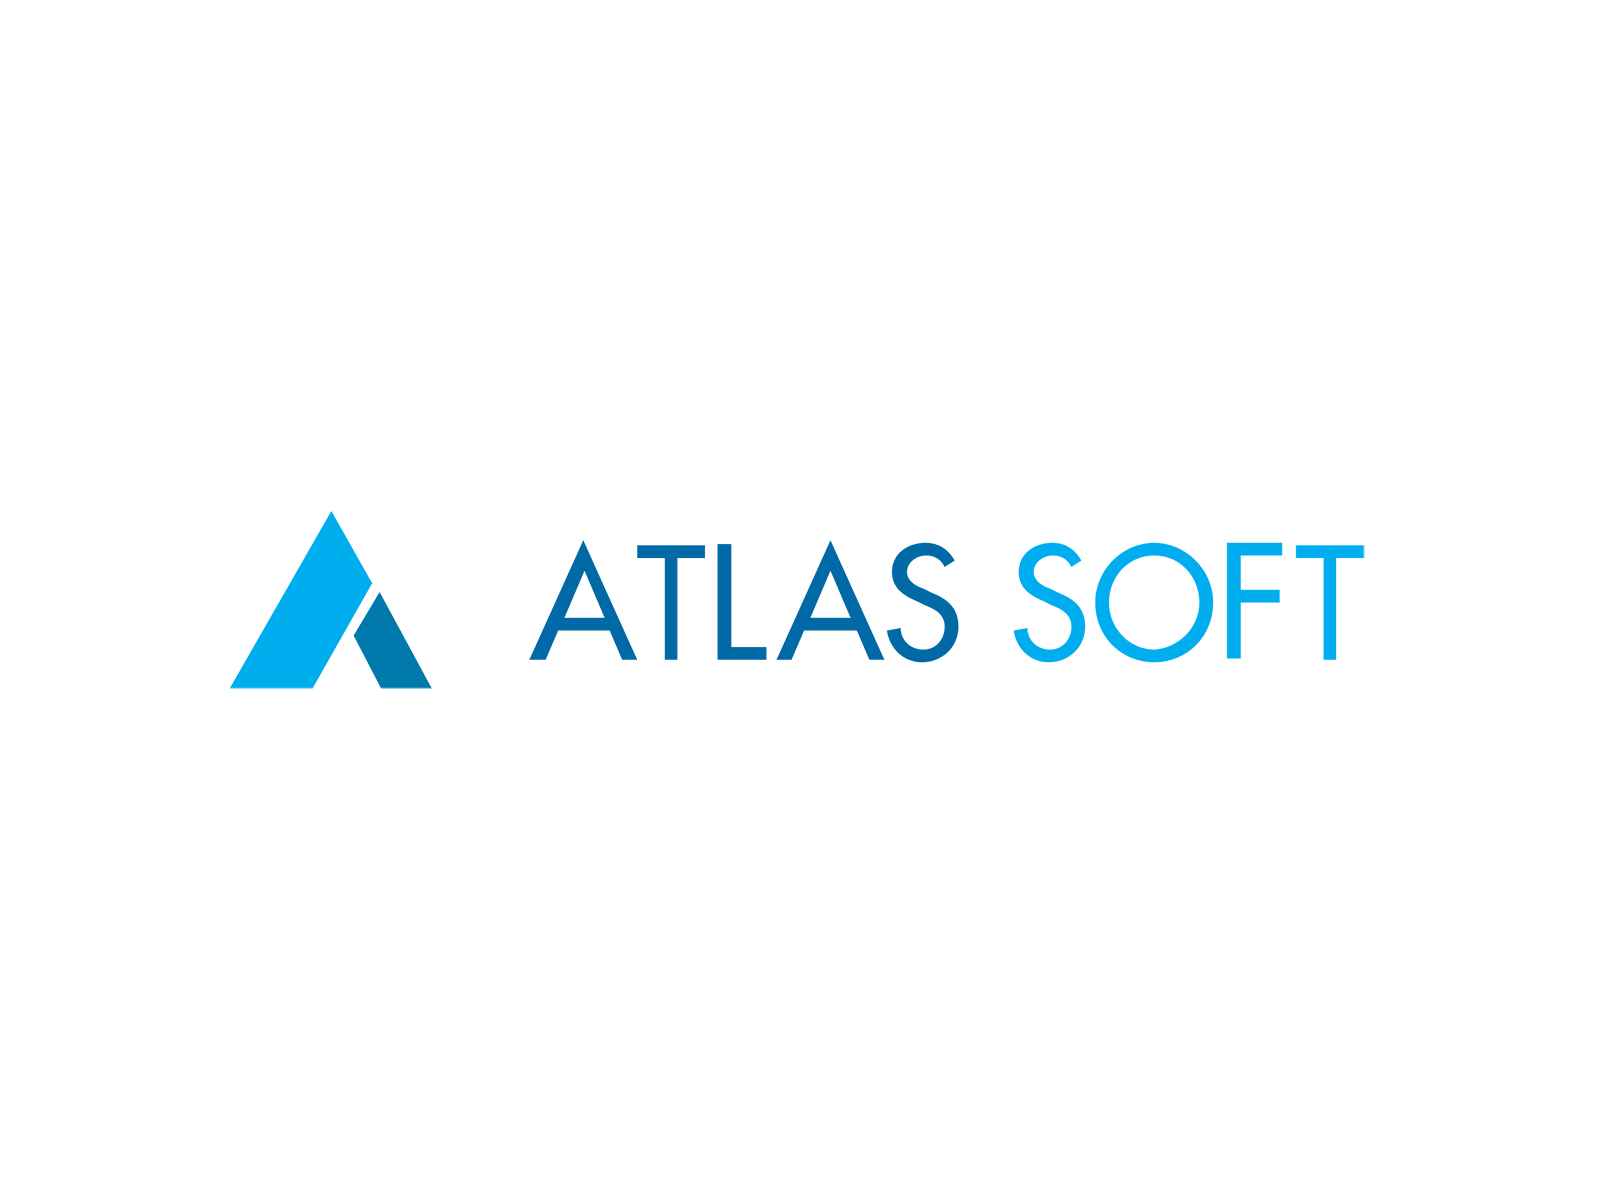 Atlas Soft